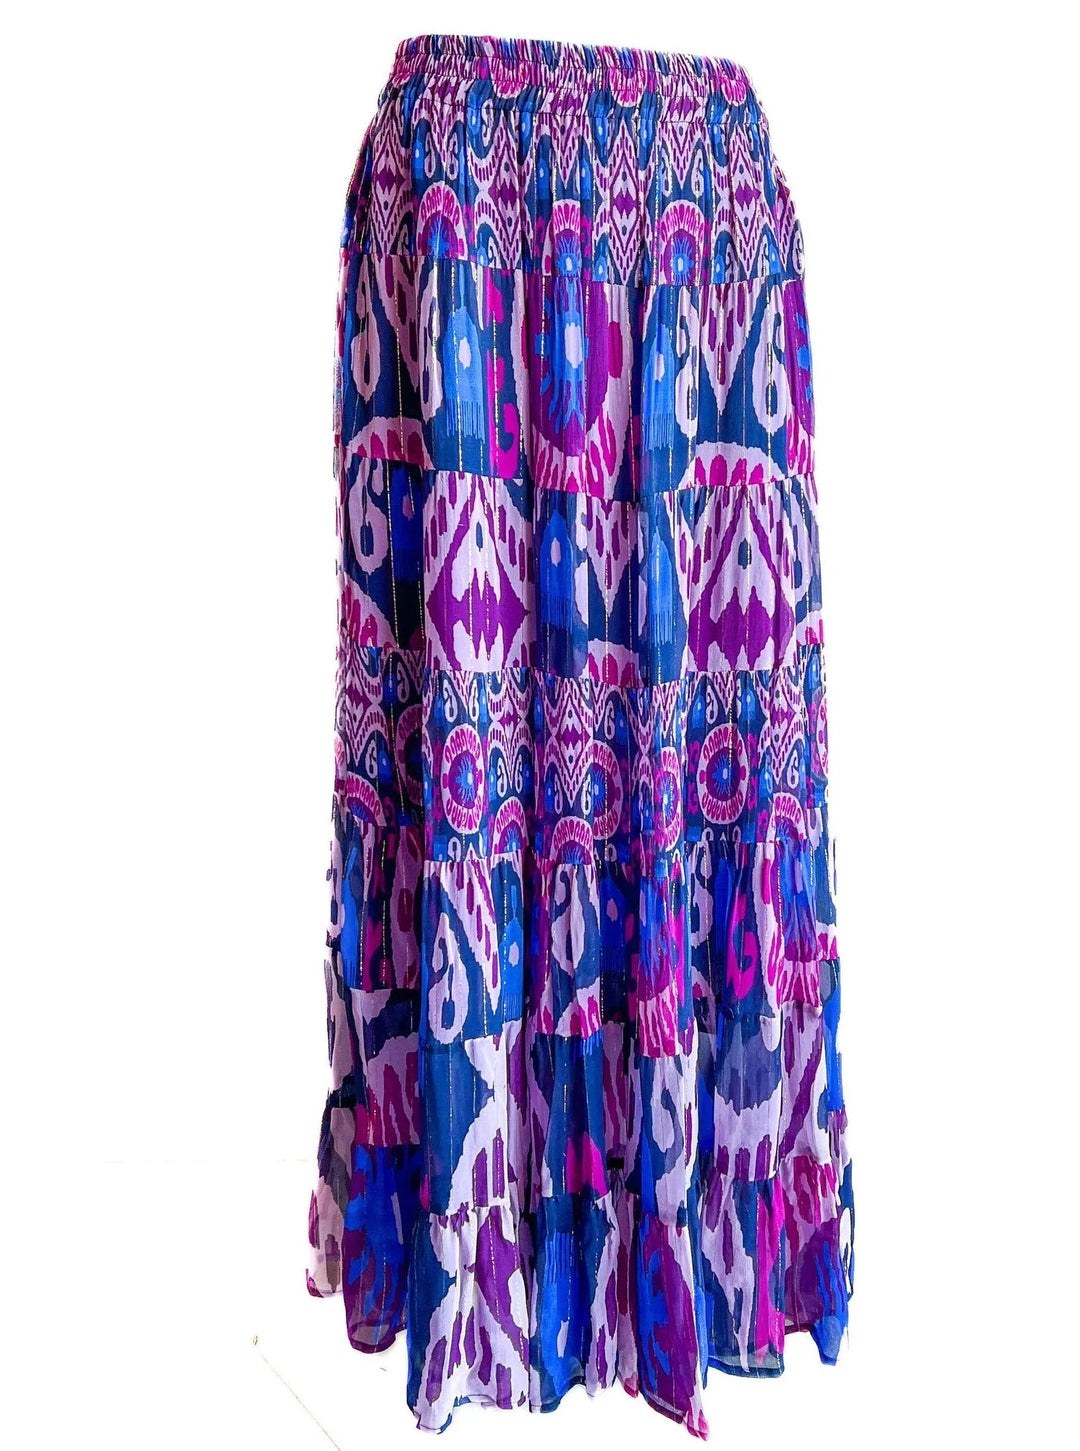 La Plage skirt Jaipur Maxi Skirt in Island Ikat Violet Blues